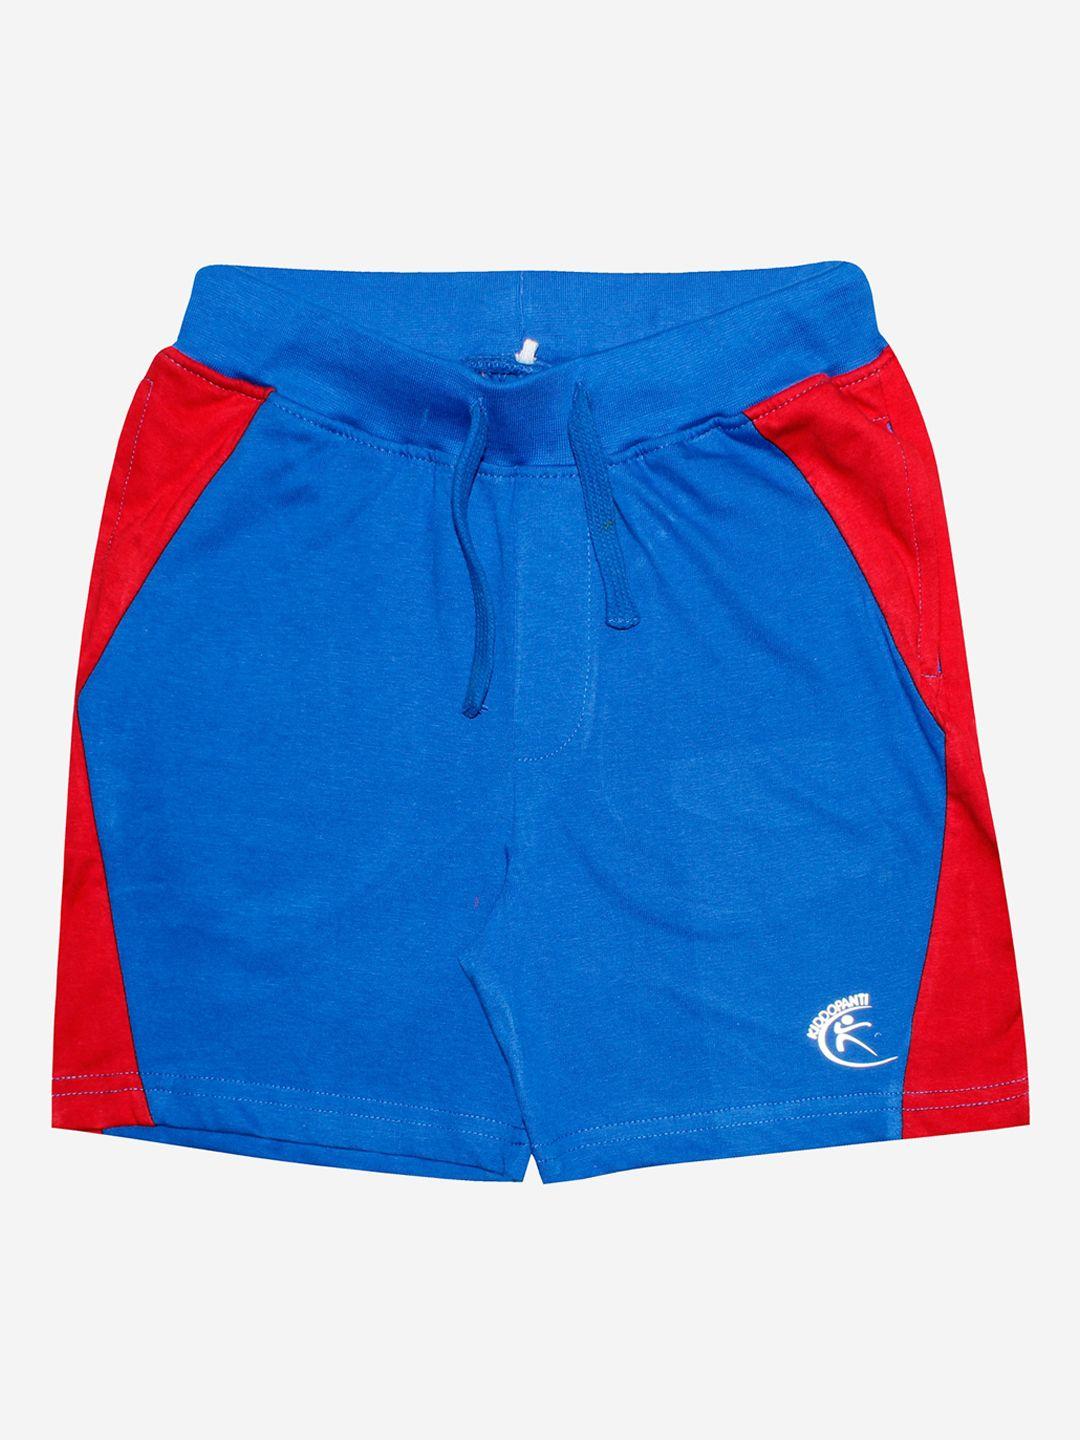 kiddopanti boys blue & red colourblocked shorts